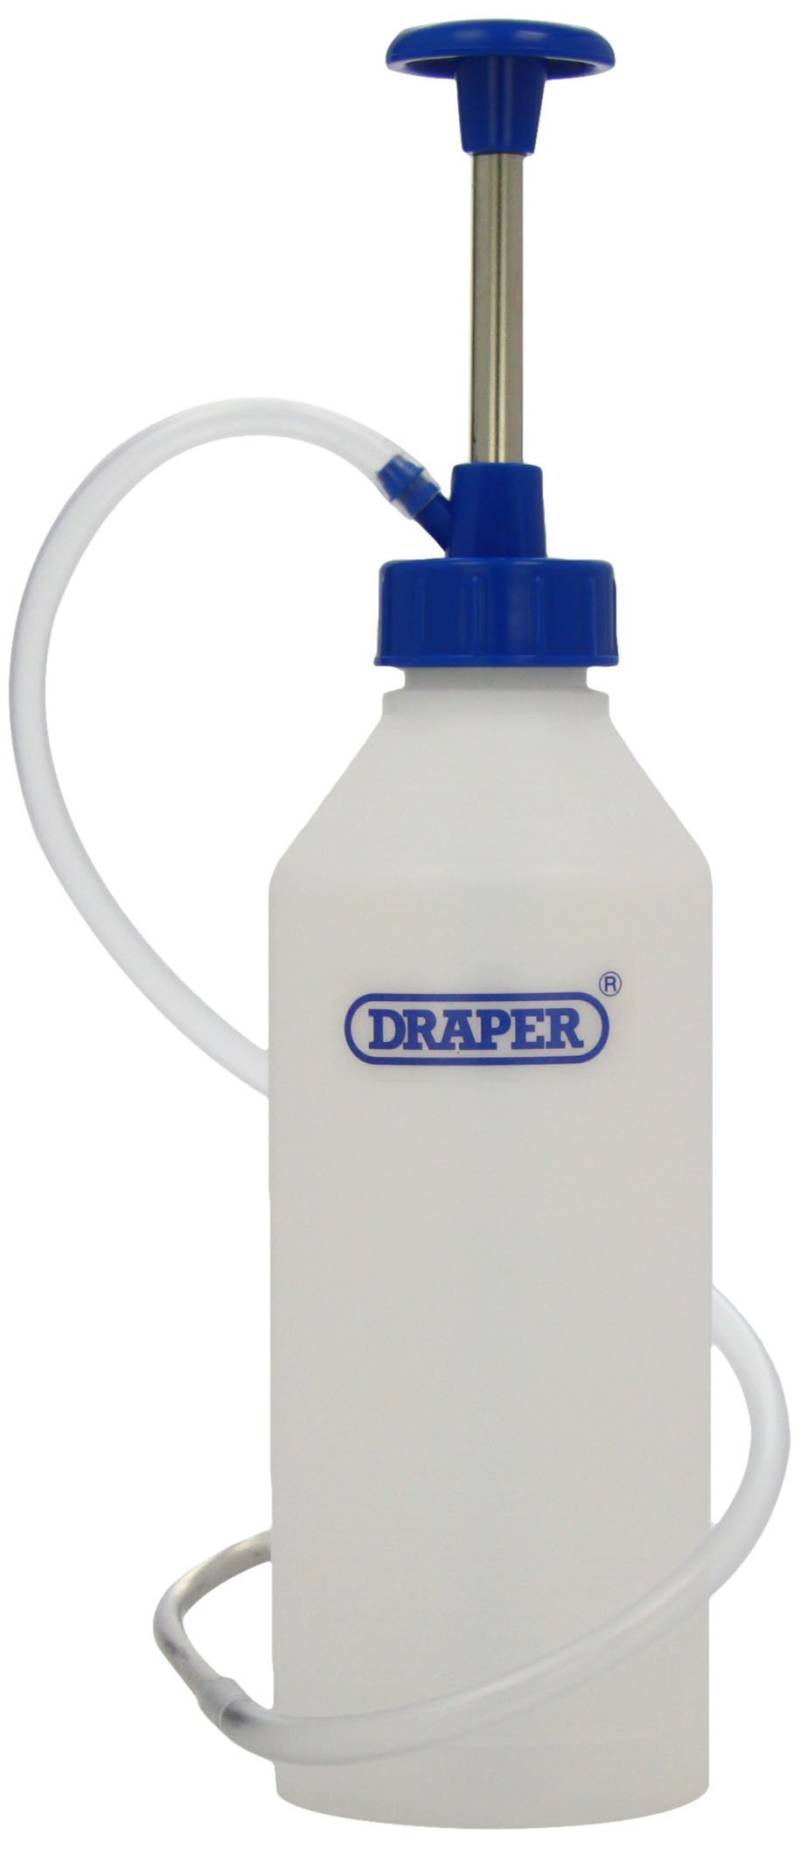 Draper 23242 Mehrzweck Pumpe, 1 l von Draper